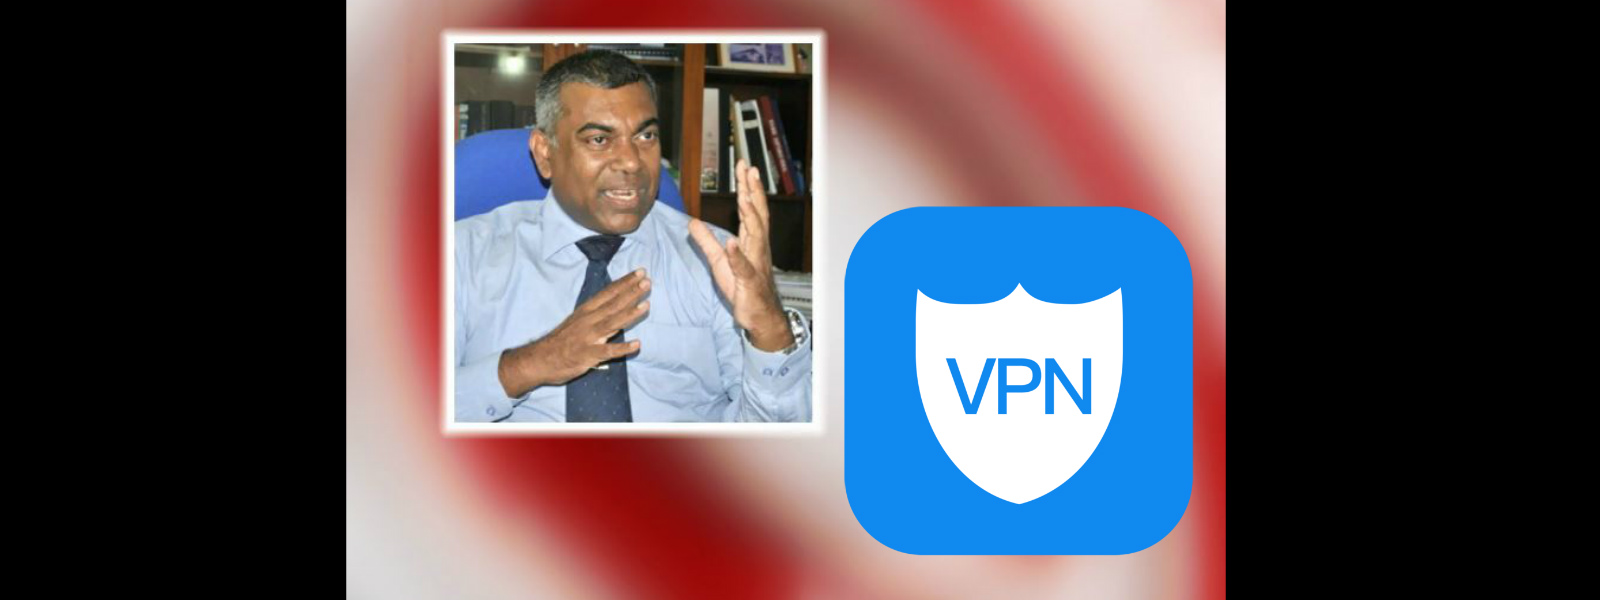 VPN පාවිච්චි කරපු අය අත්අඩංගුවට ගන්න බැහැ